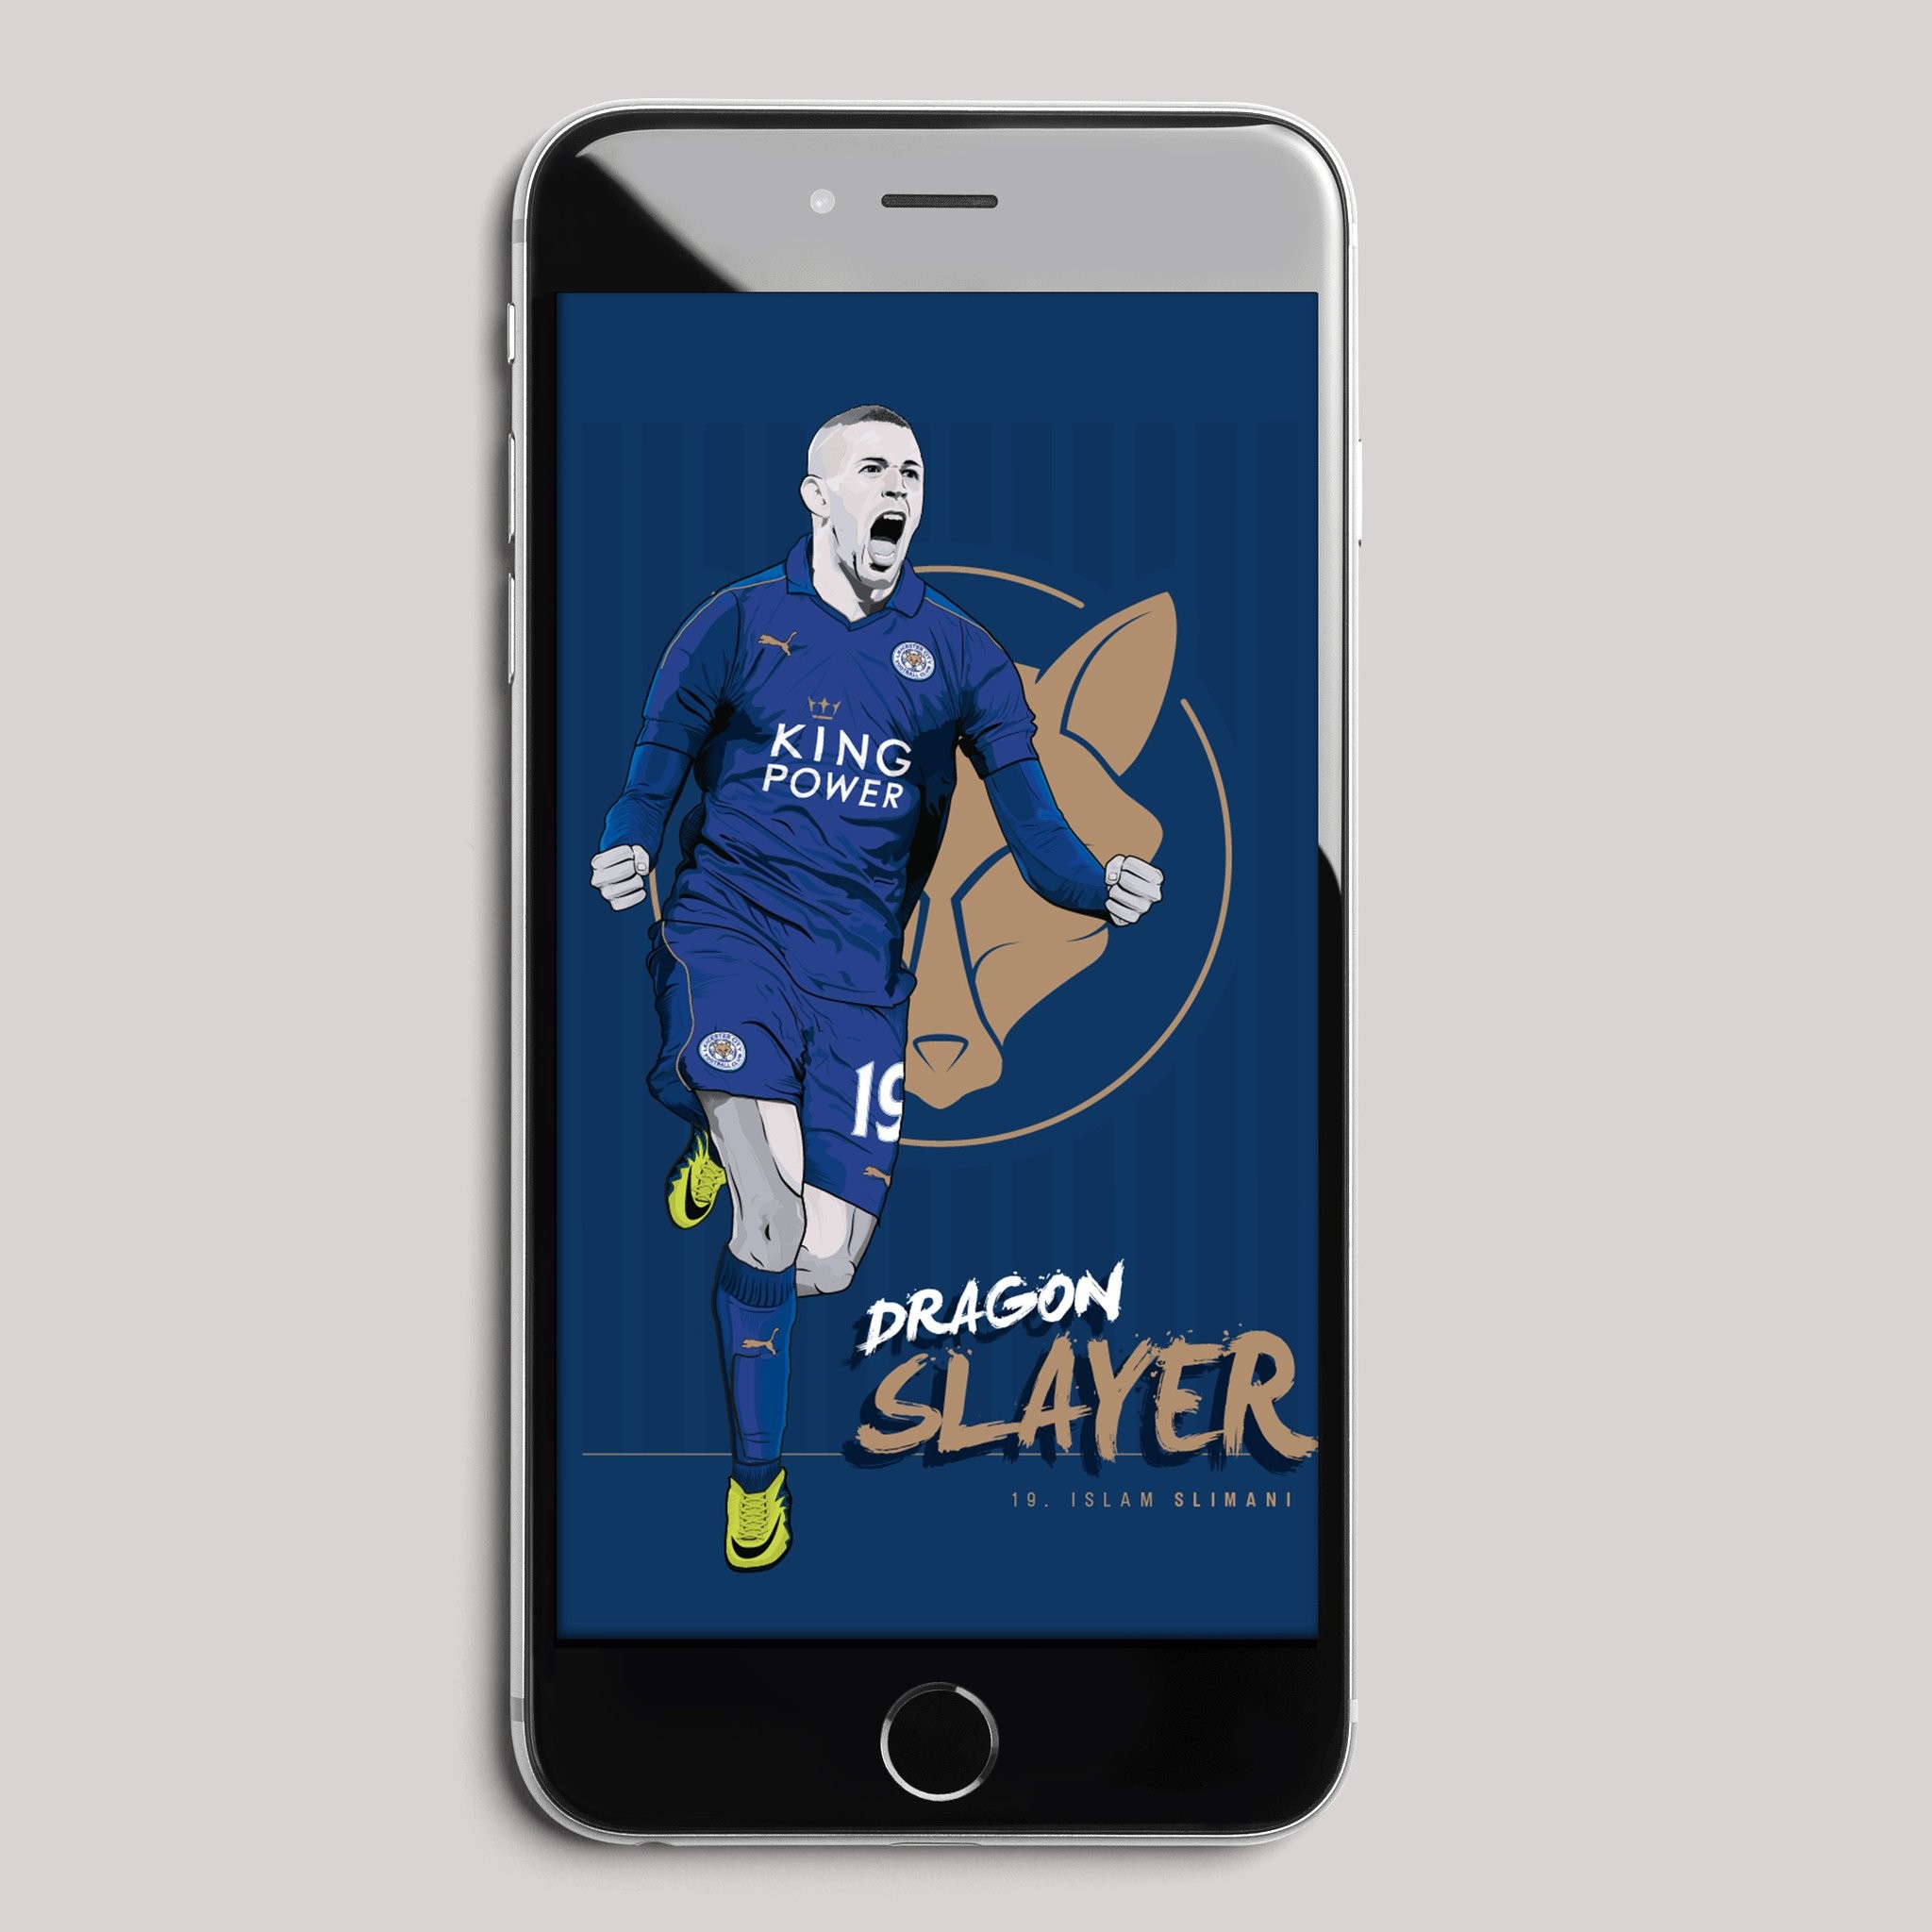 2048x2048 Dragon Slayer: Islam Slimani Smartphone Wallpaper